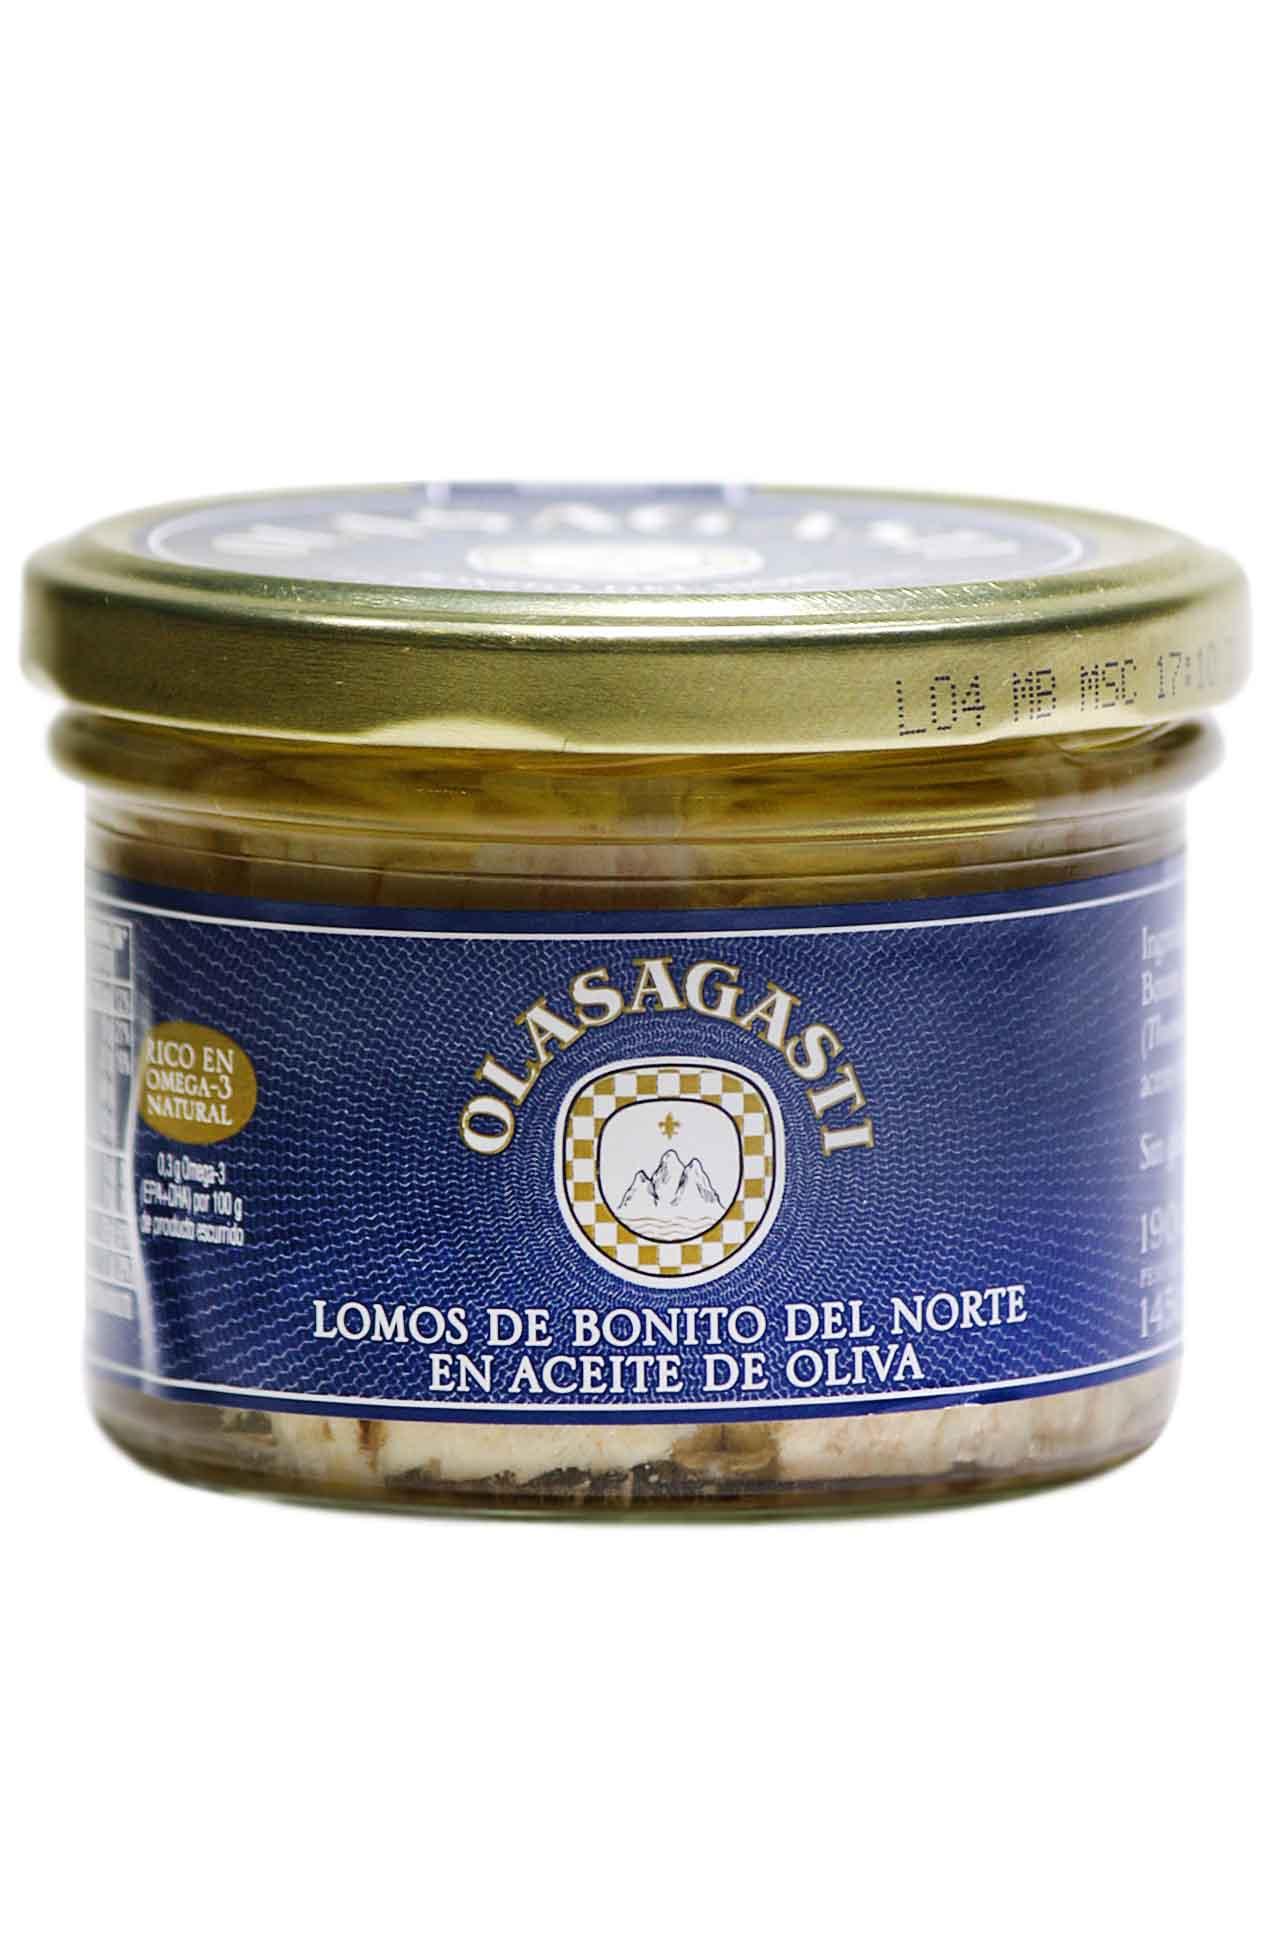 Loin of bonito in olive oil